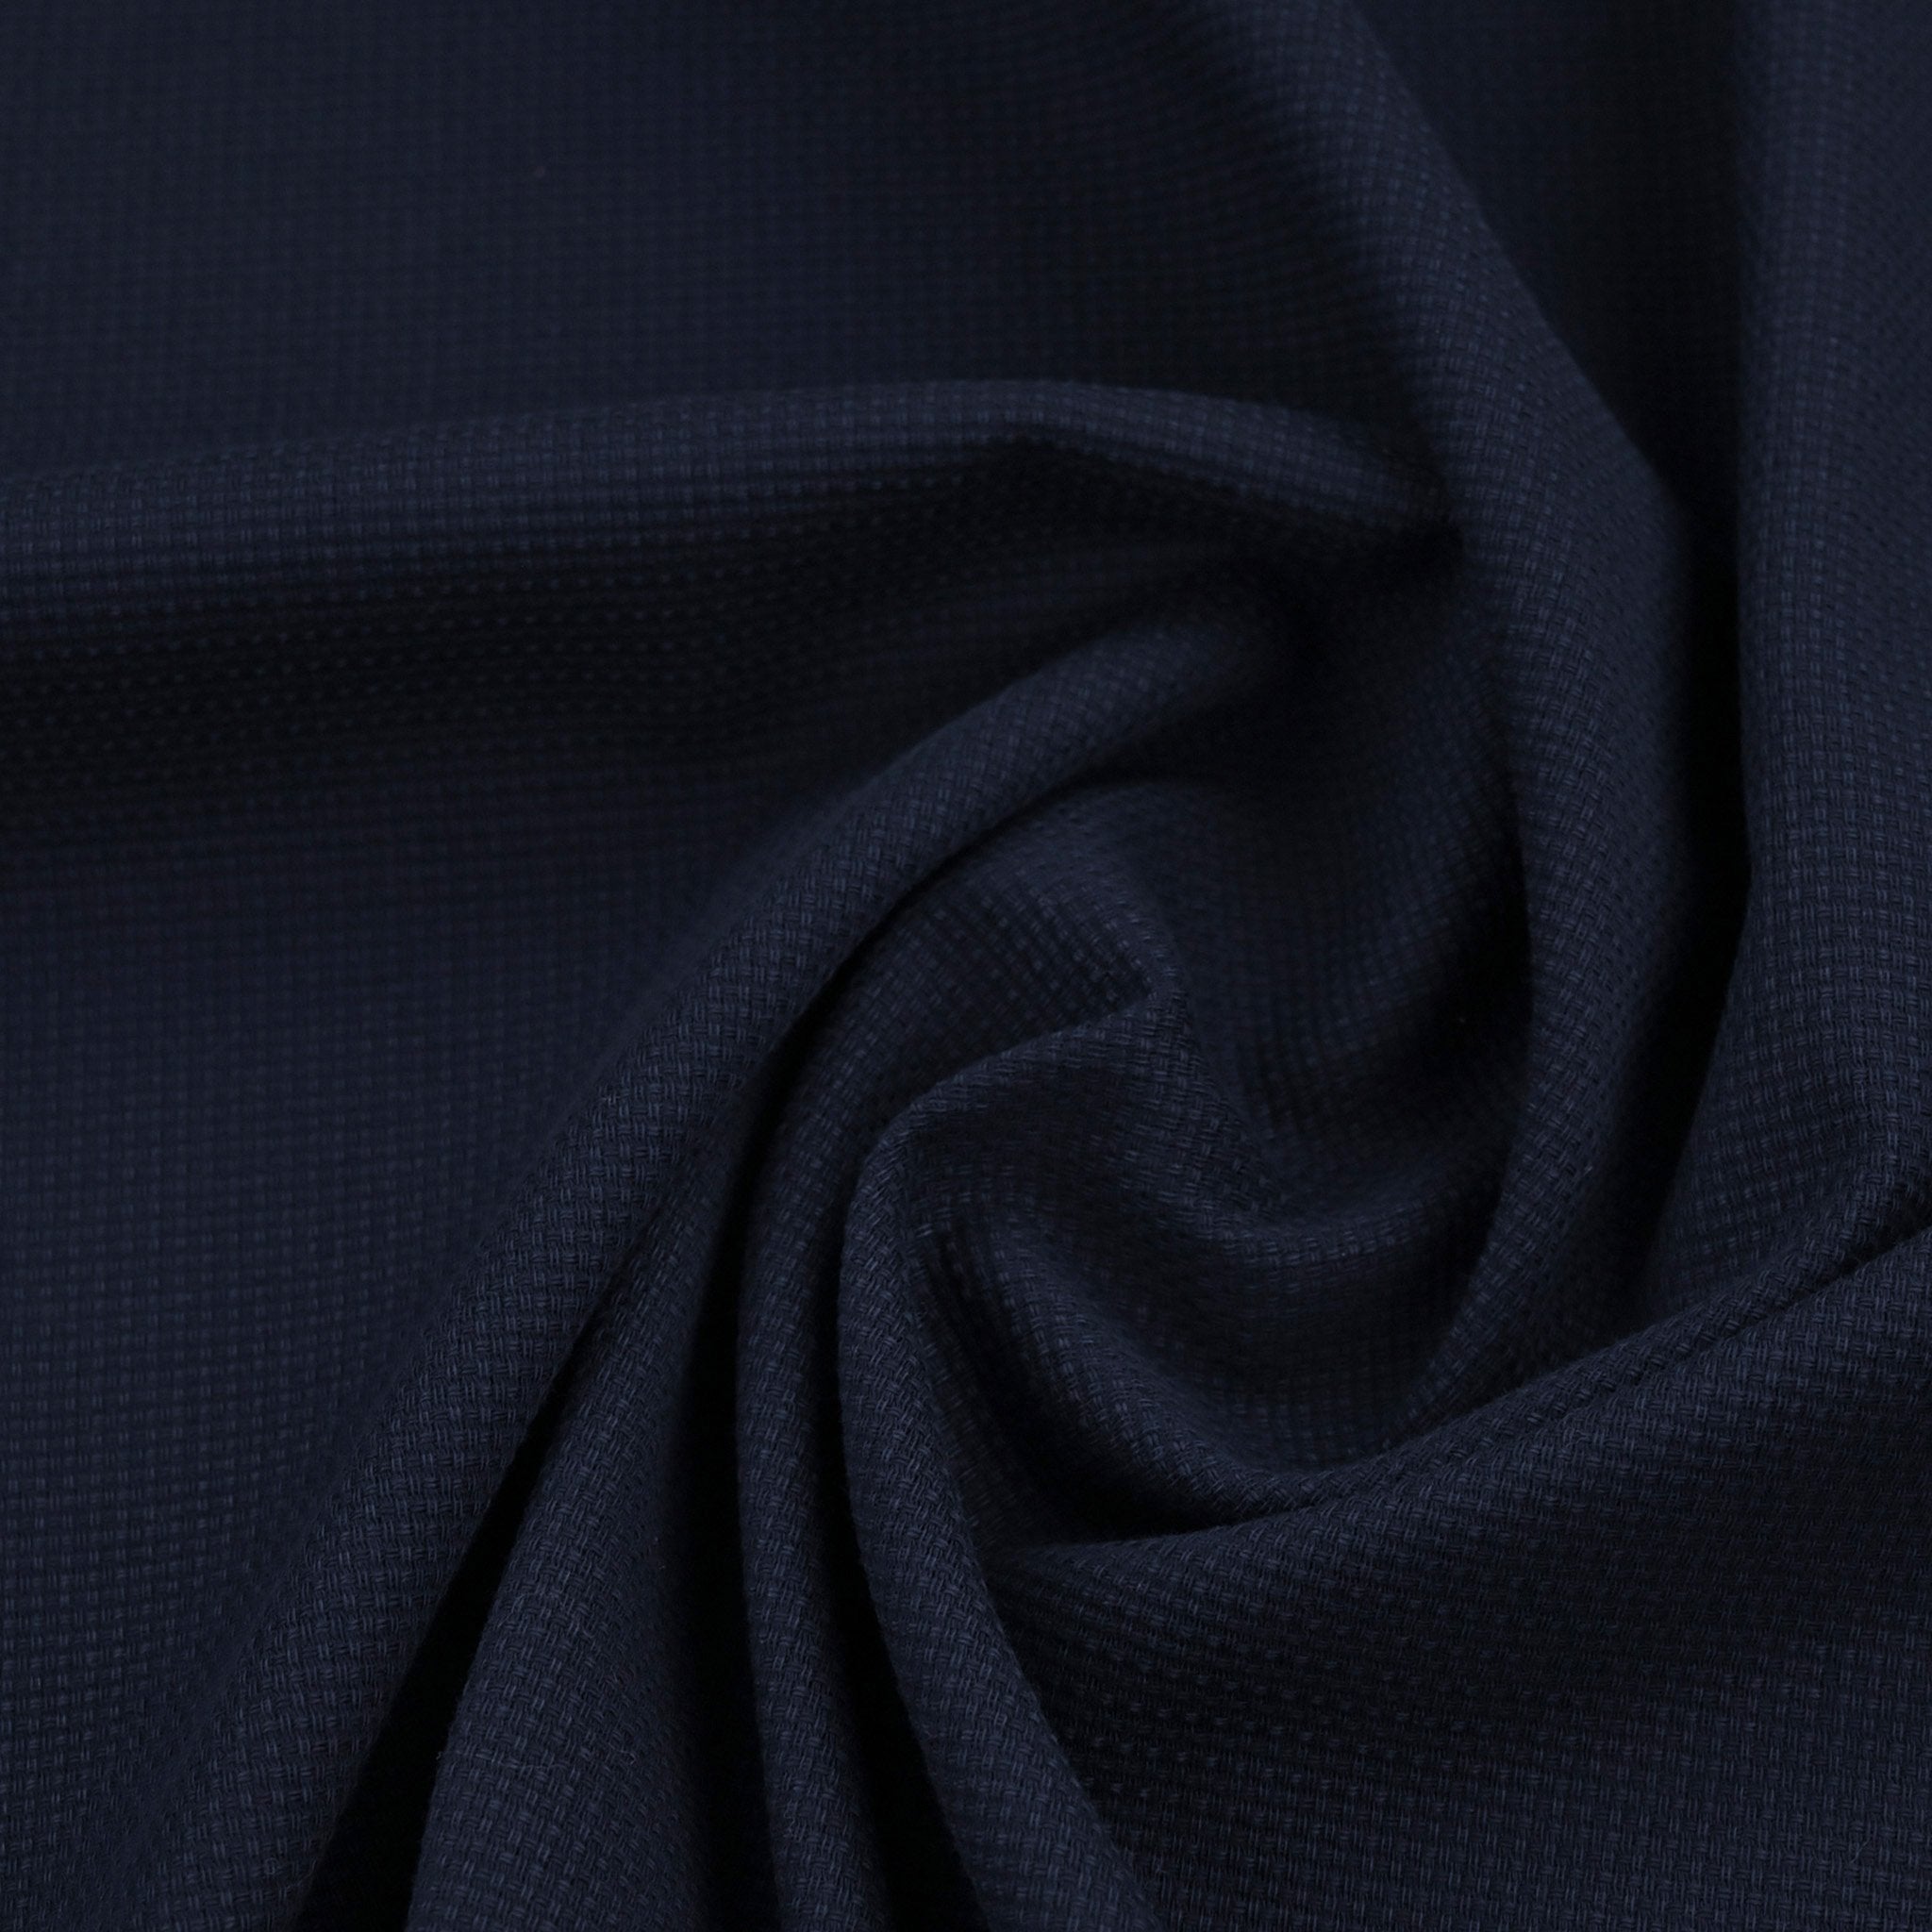 Navy Plain Tweed Fabric 2799